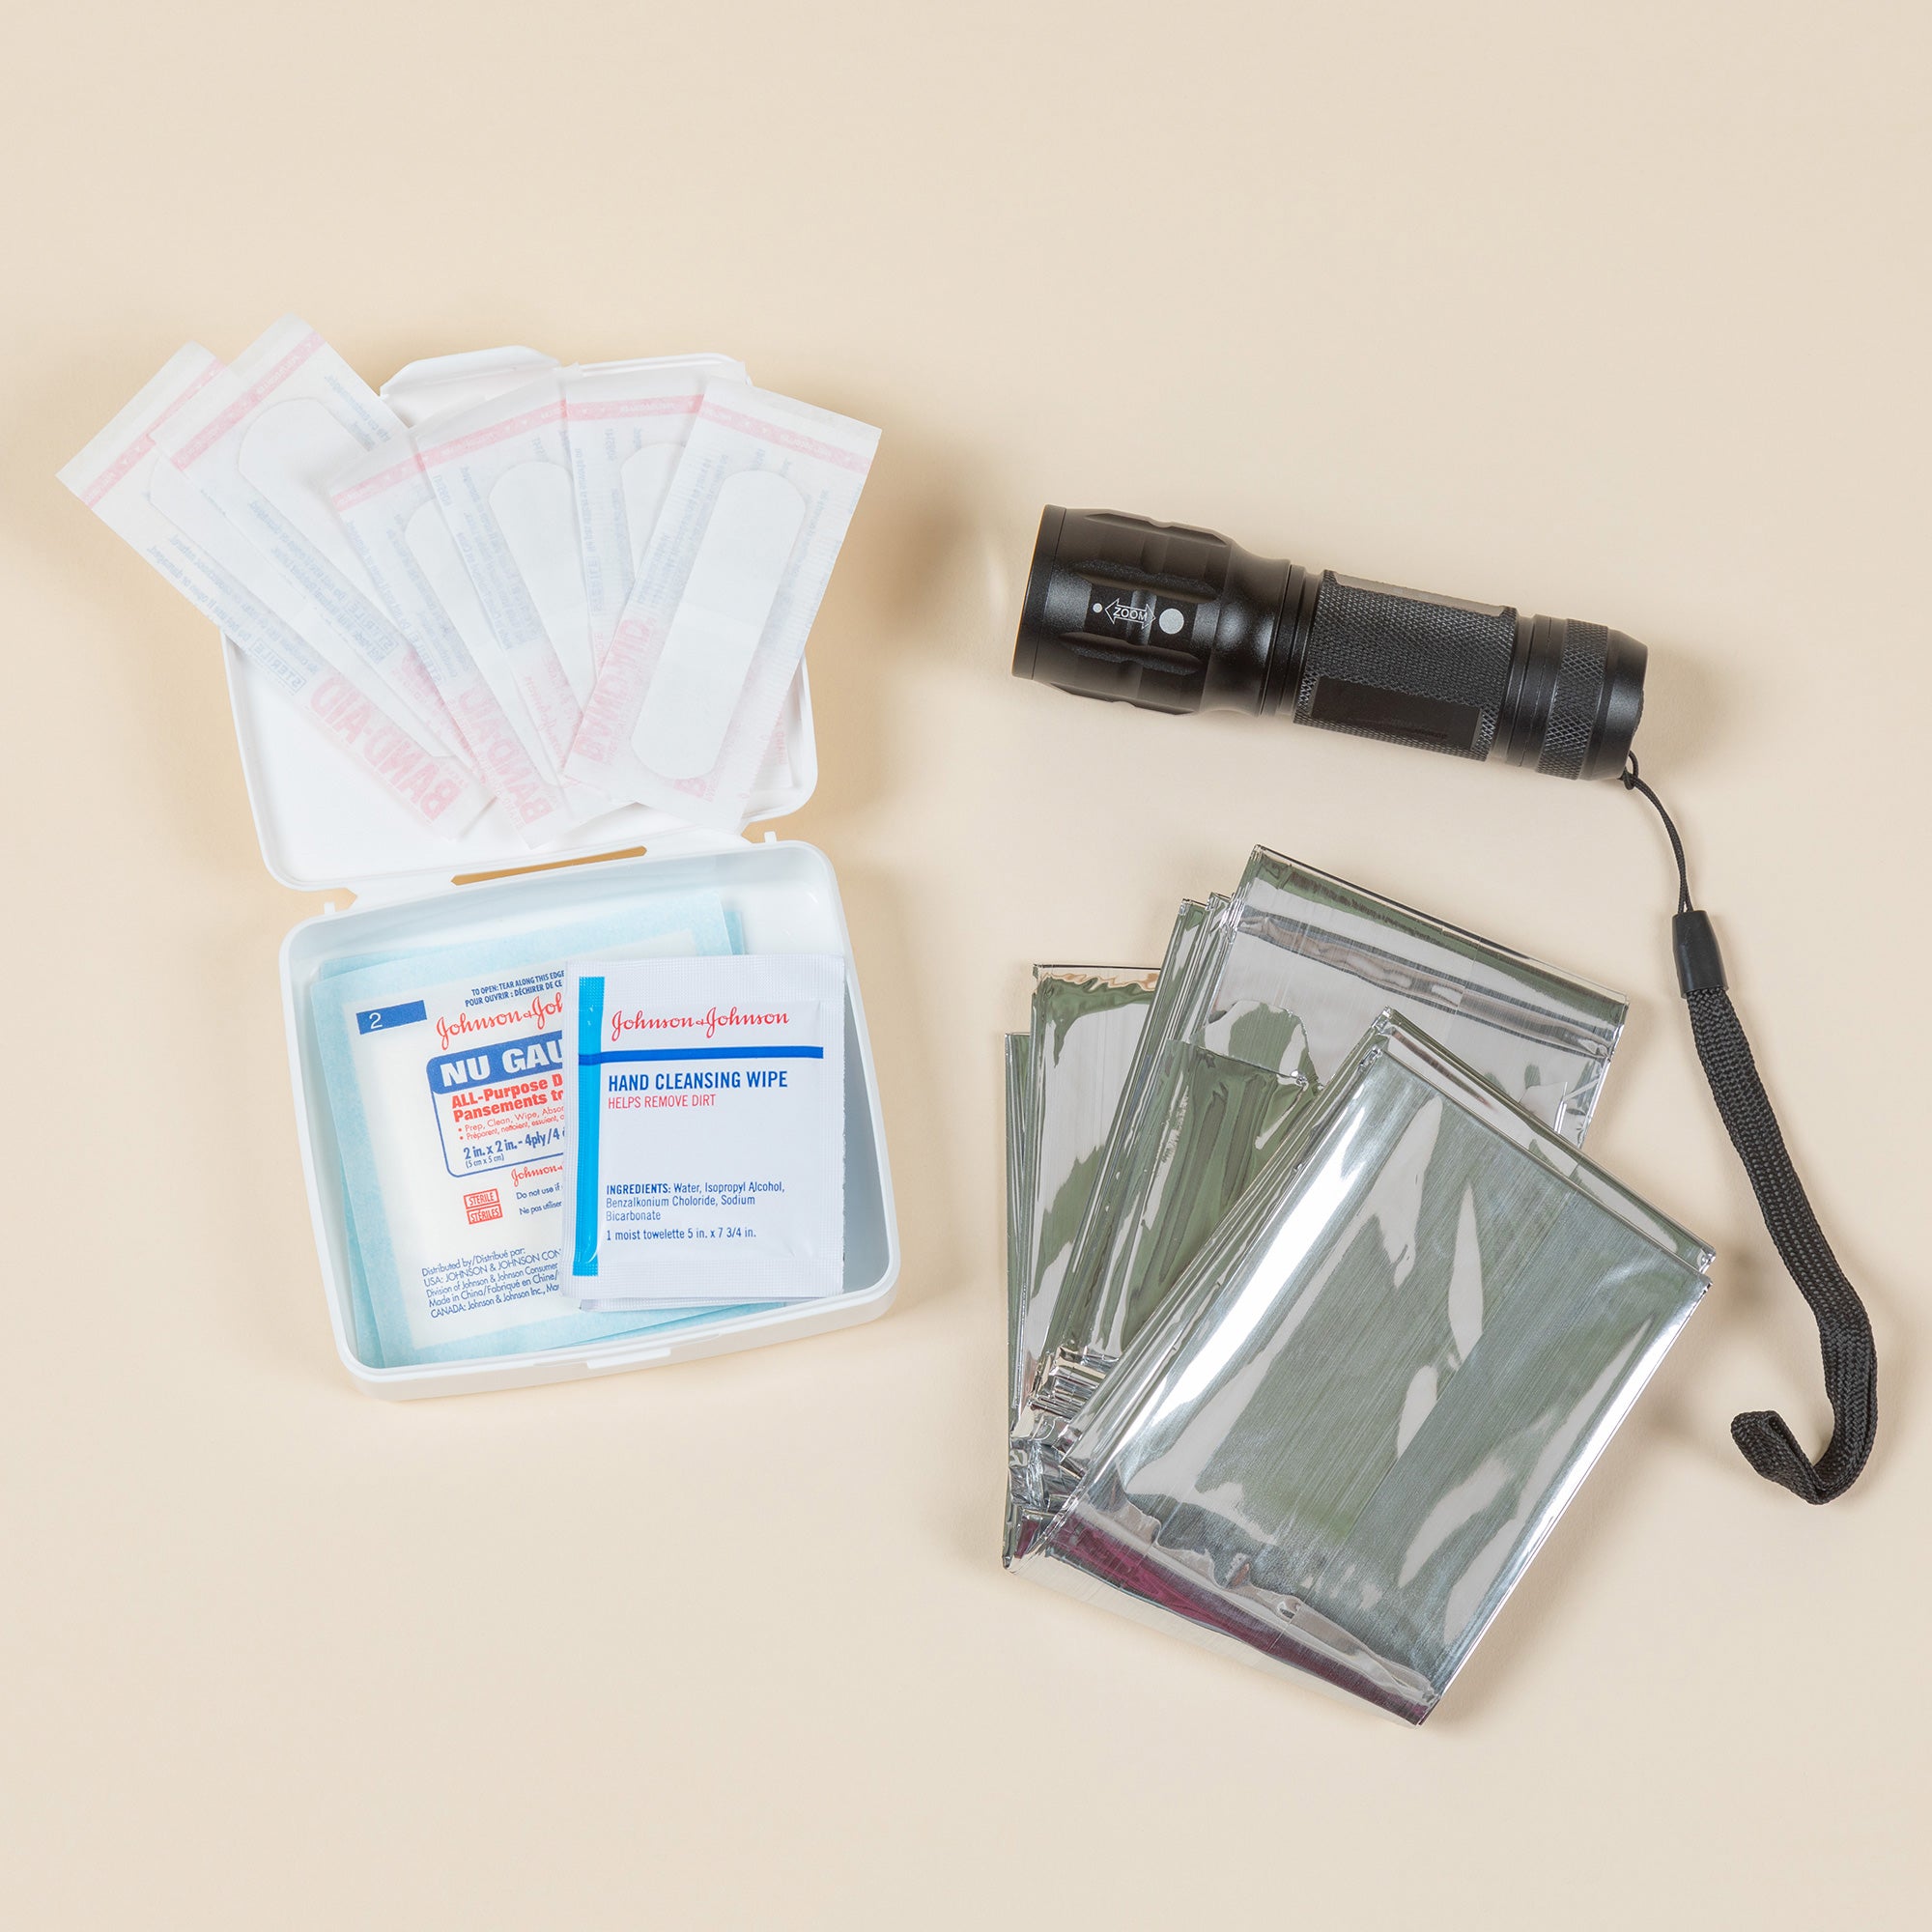 Disaster Aid Emergency Kits